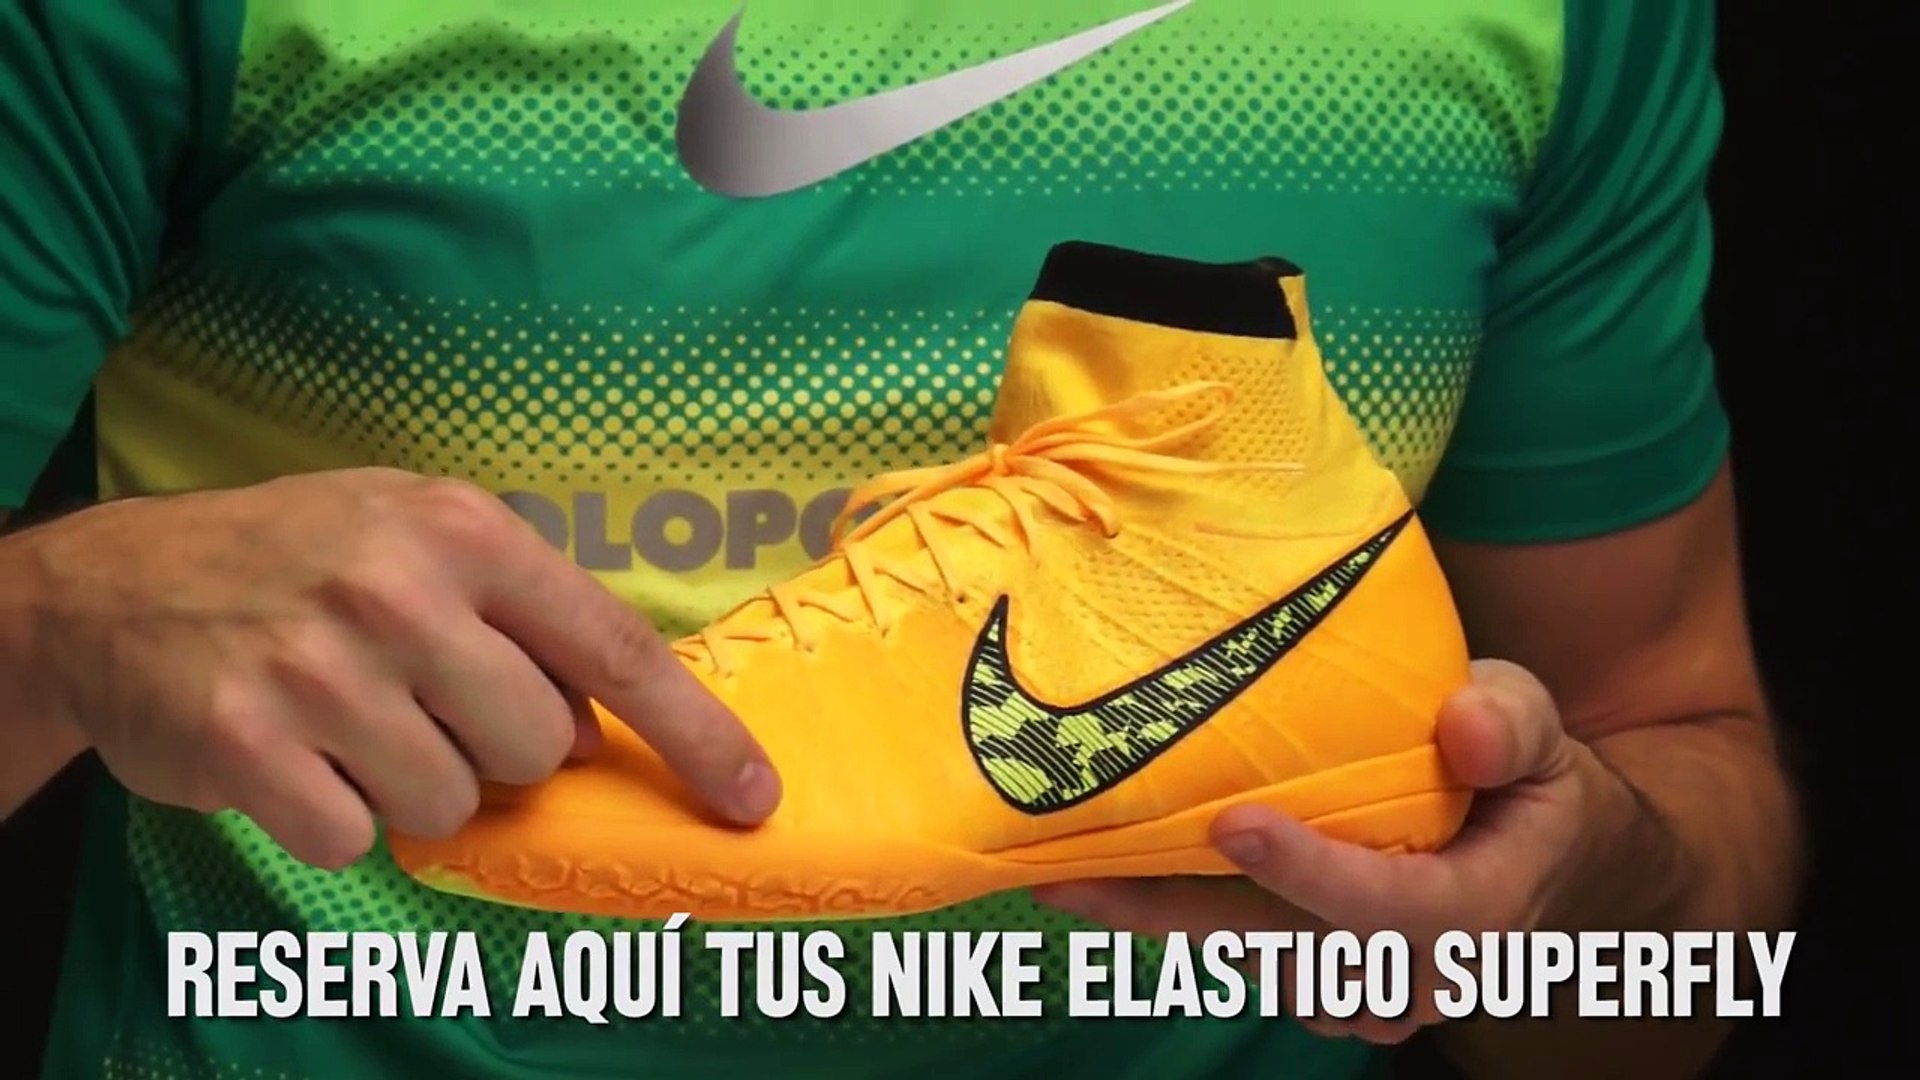 Review zapatilla sala Nike Elastico Superfly - video dailymotion